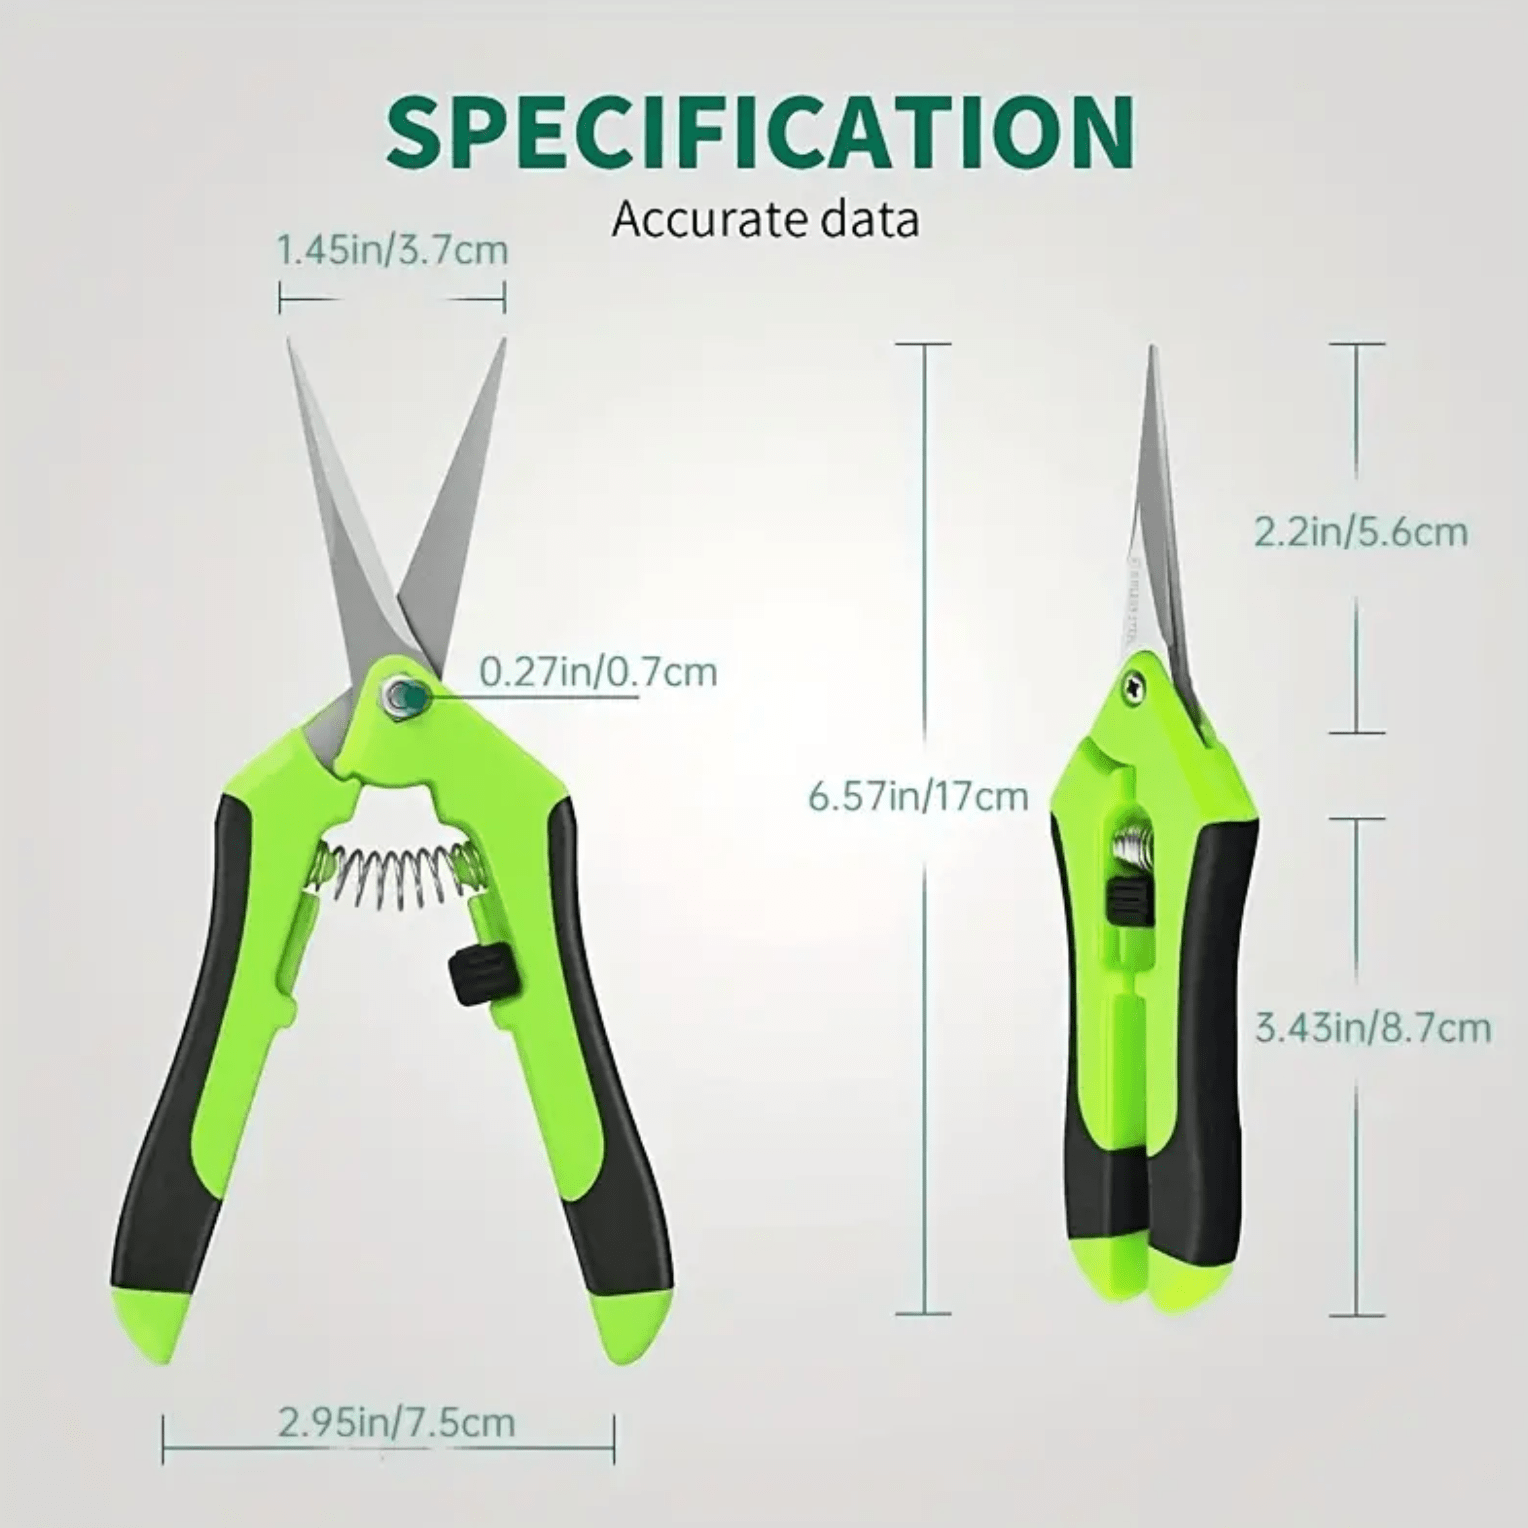 2.5" x 6.5" Stainless Steel Precision Scissors with ORANGE or GREEN Comfortable Handle, Beading Scissors, Basics Basics